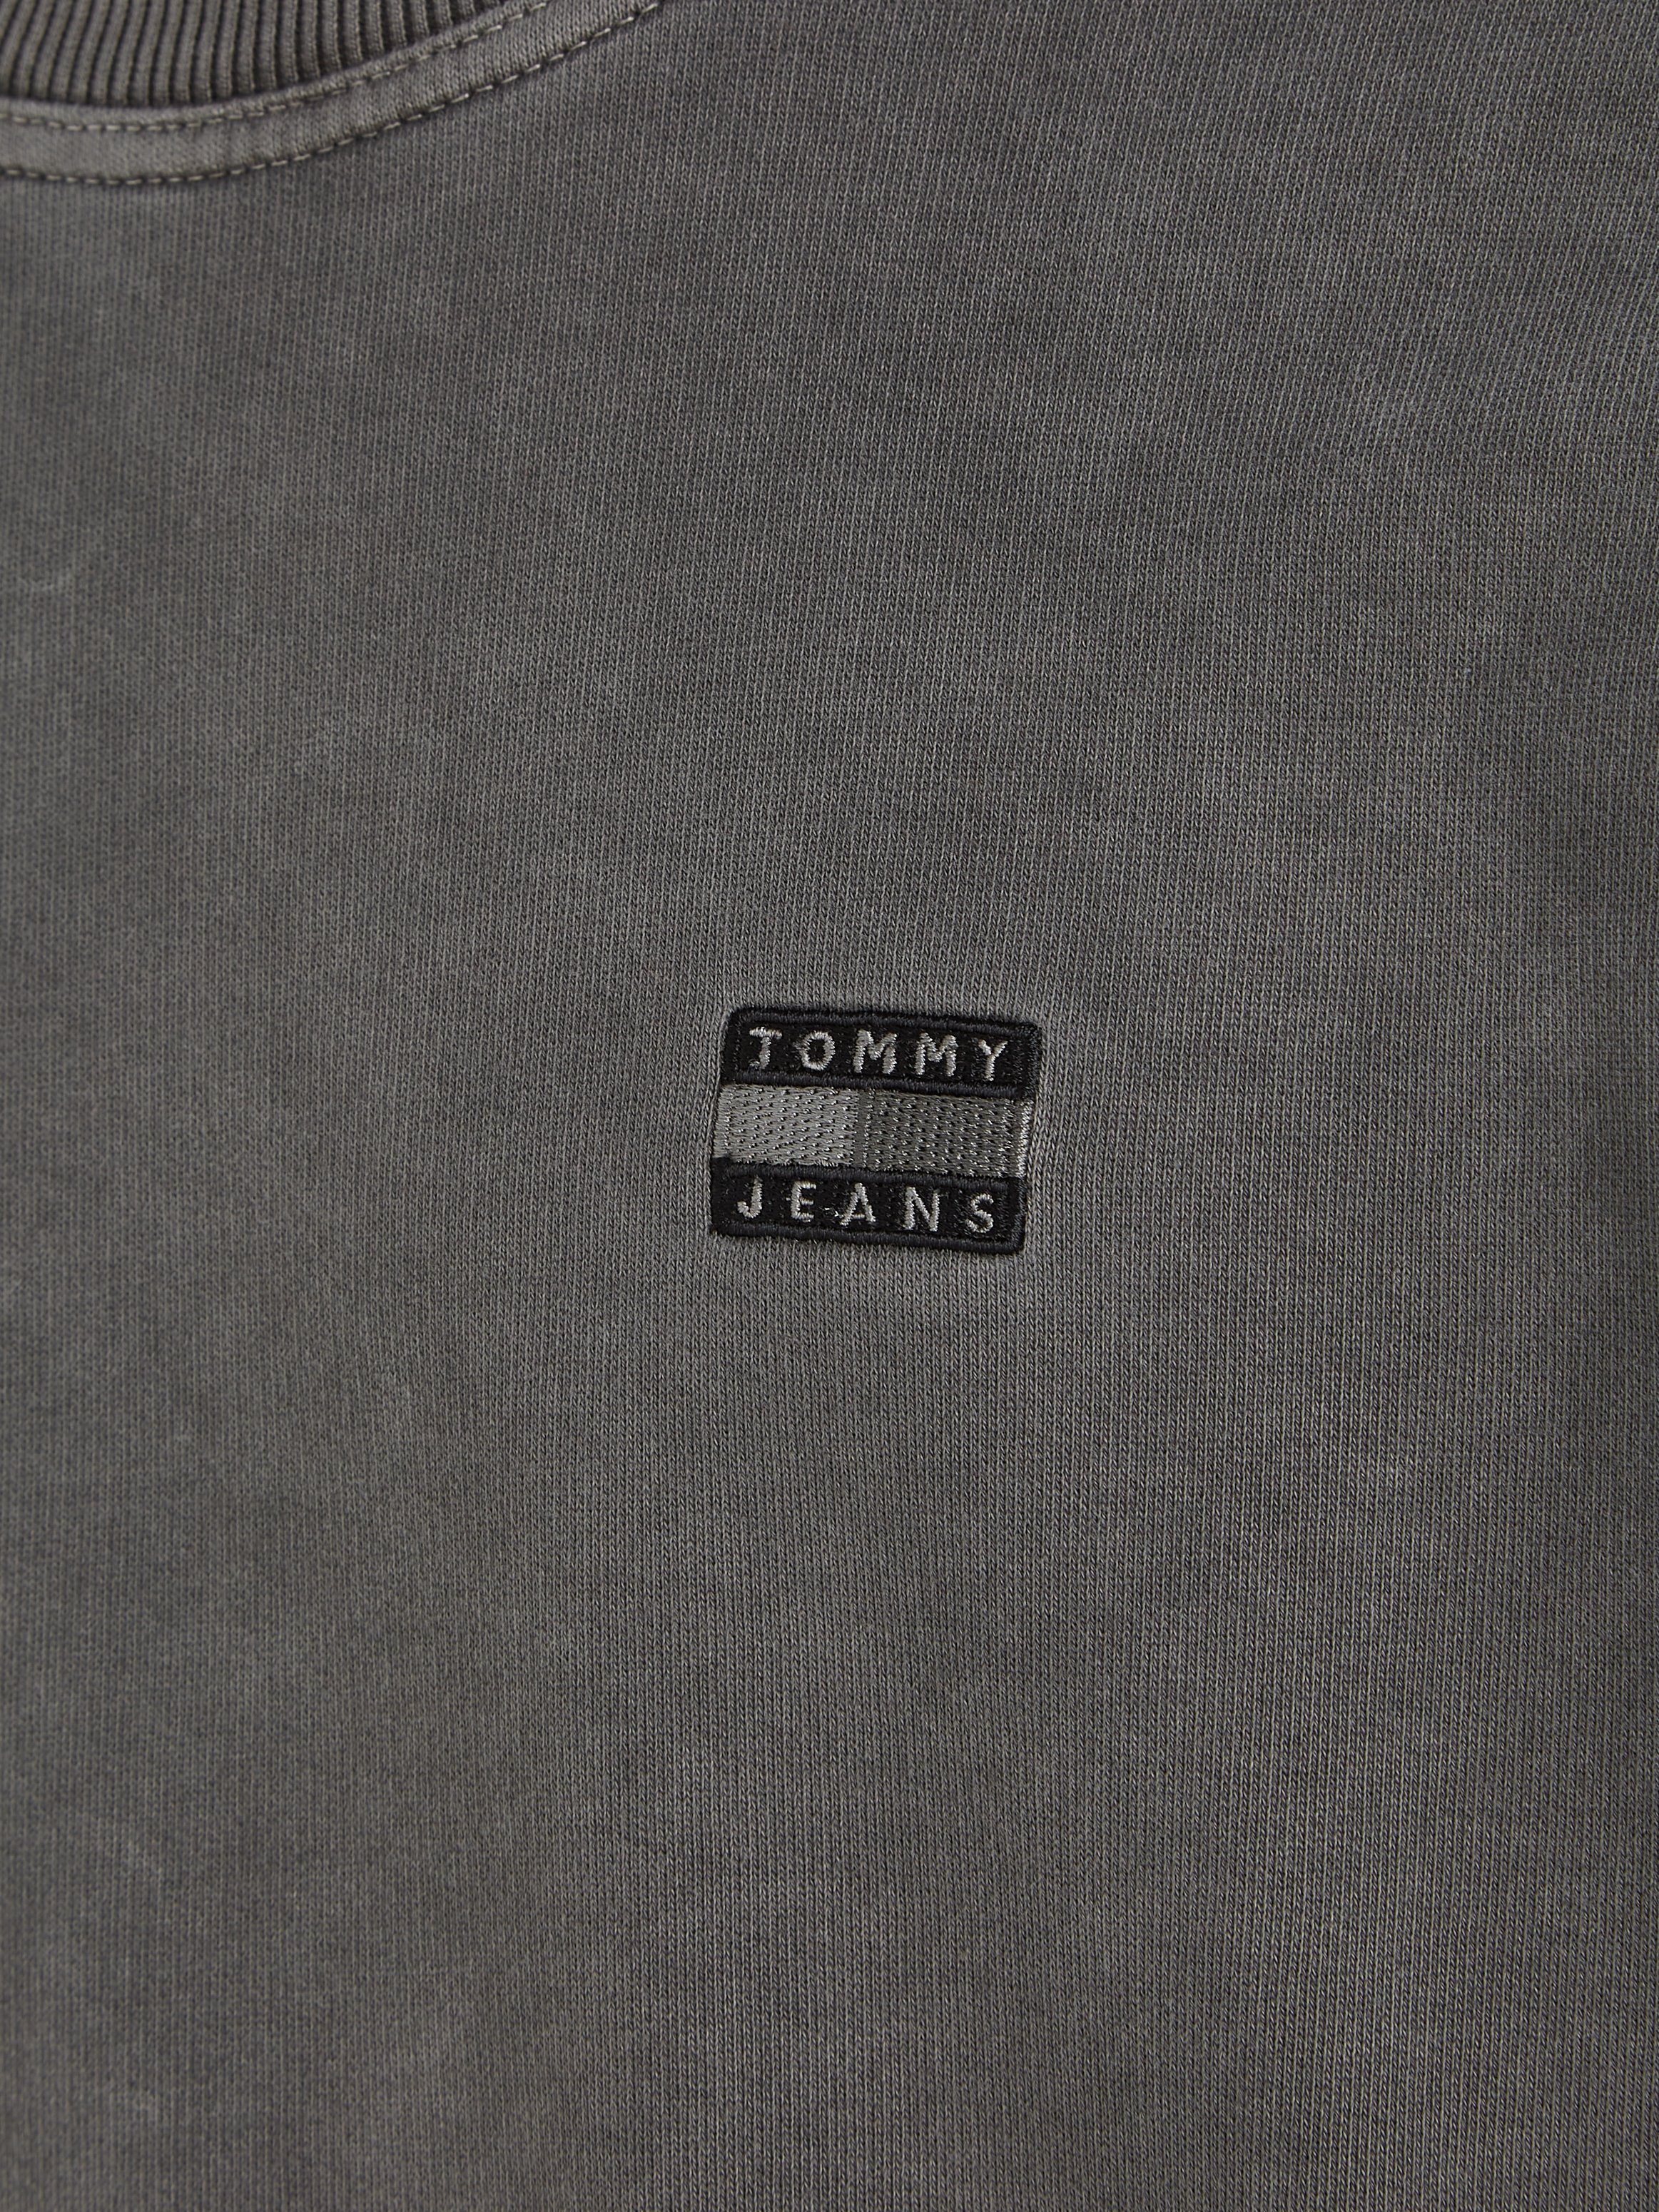 Tommy Jeans TJM REG BADGE Sweatshirt Black CNECK TONAL